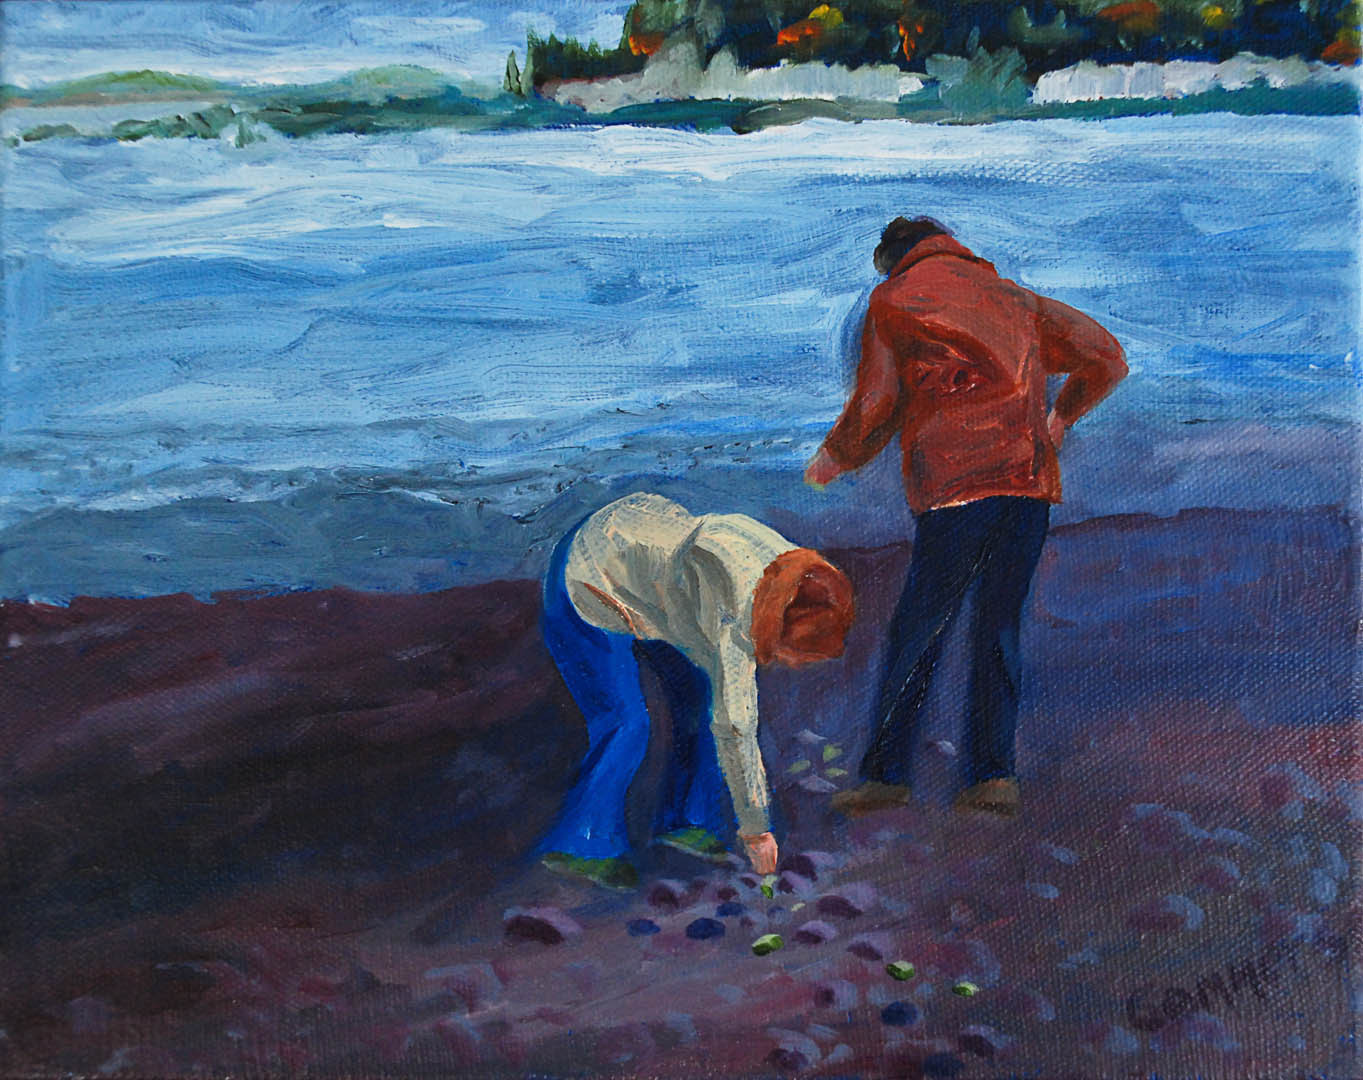 06 Jane on Jasper Beach, Oil on Canvas 8x10",  (sold)